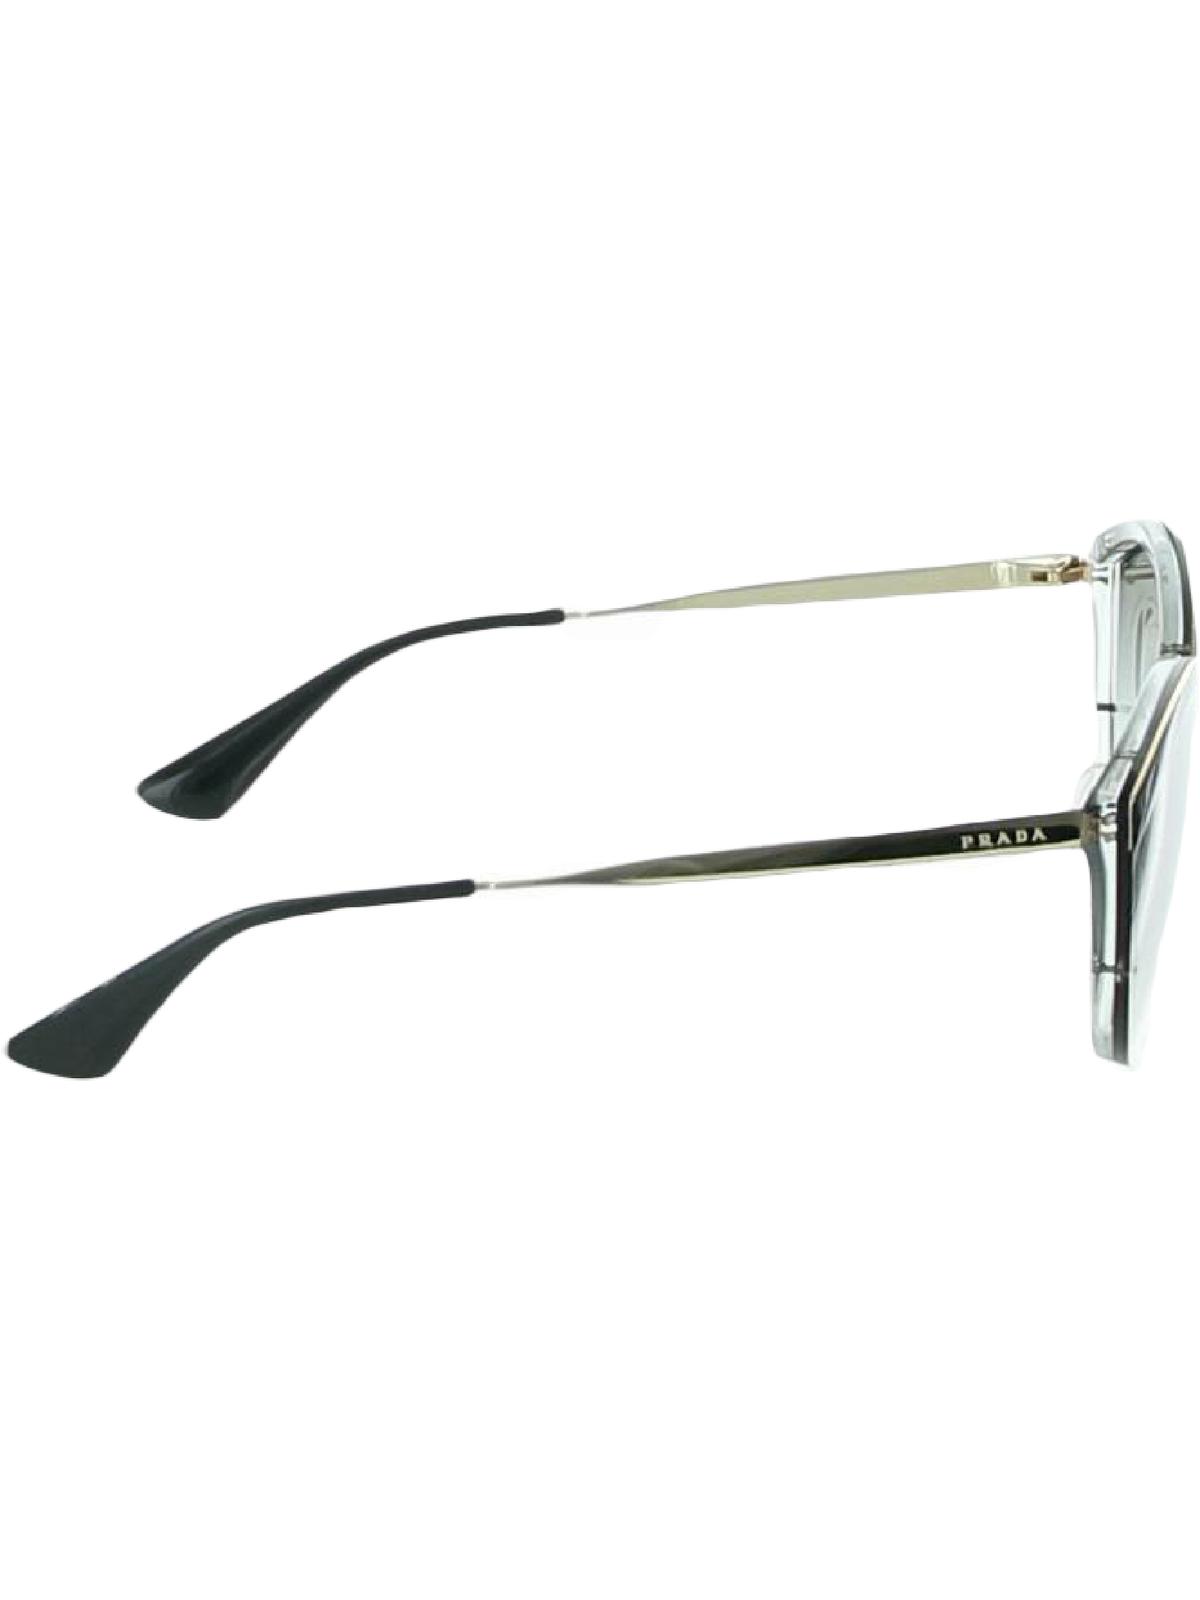 Prada Womens UV Protection Round Cat Eye Fashion Sunglasses Gray 63mm - image 3 of 3